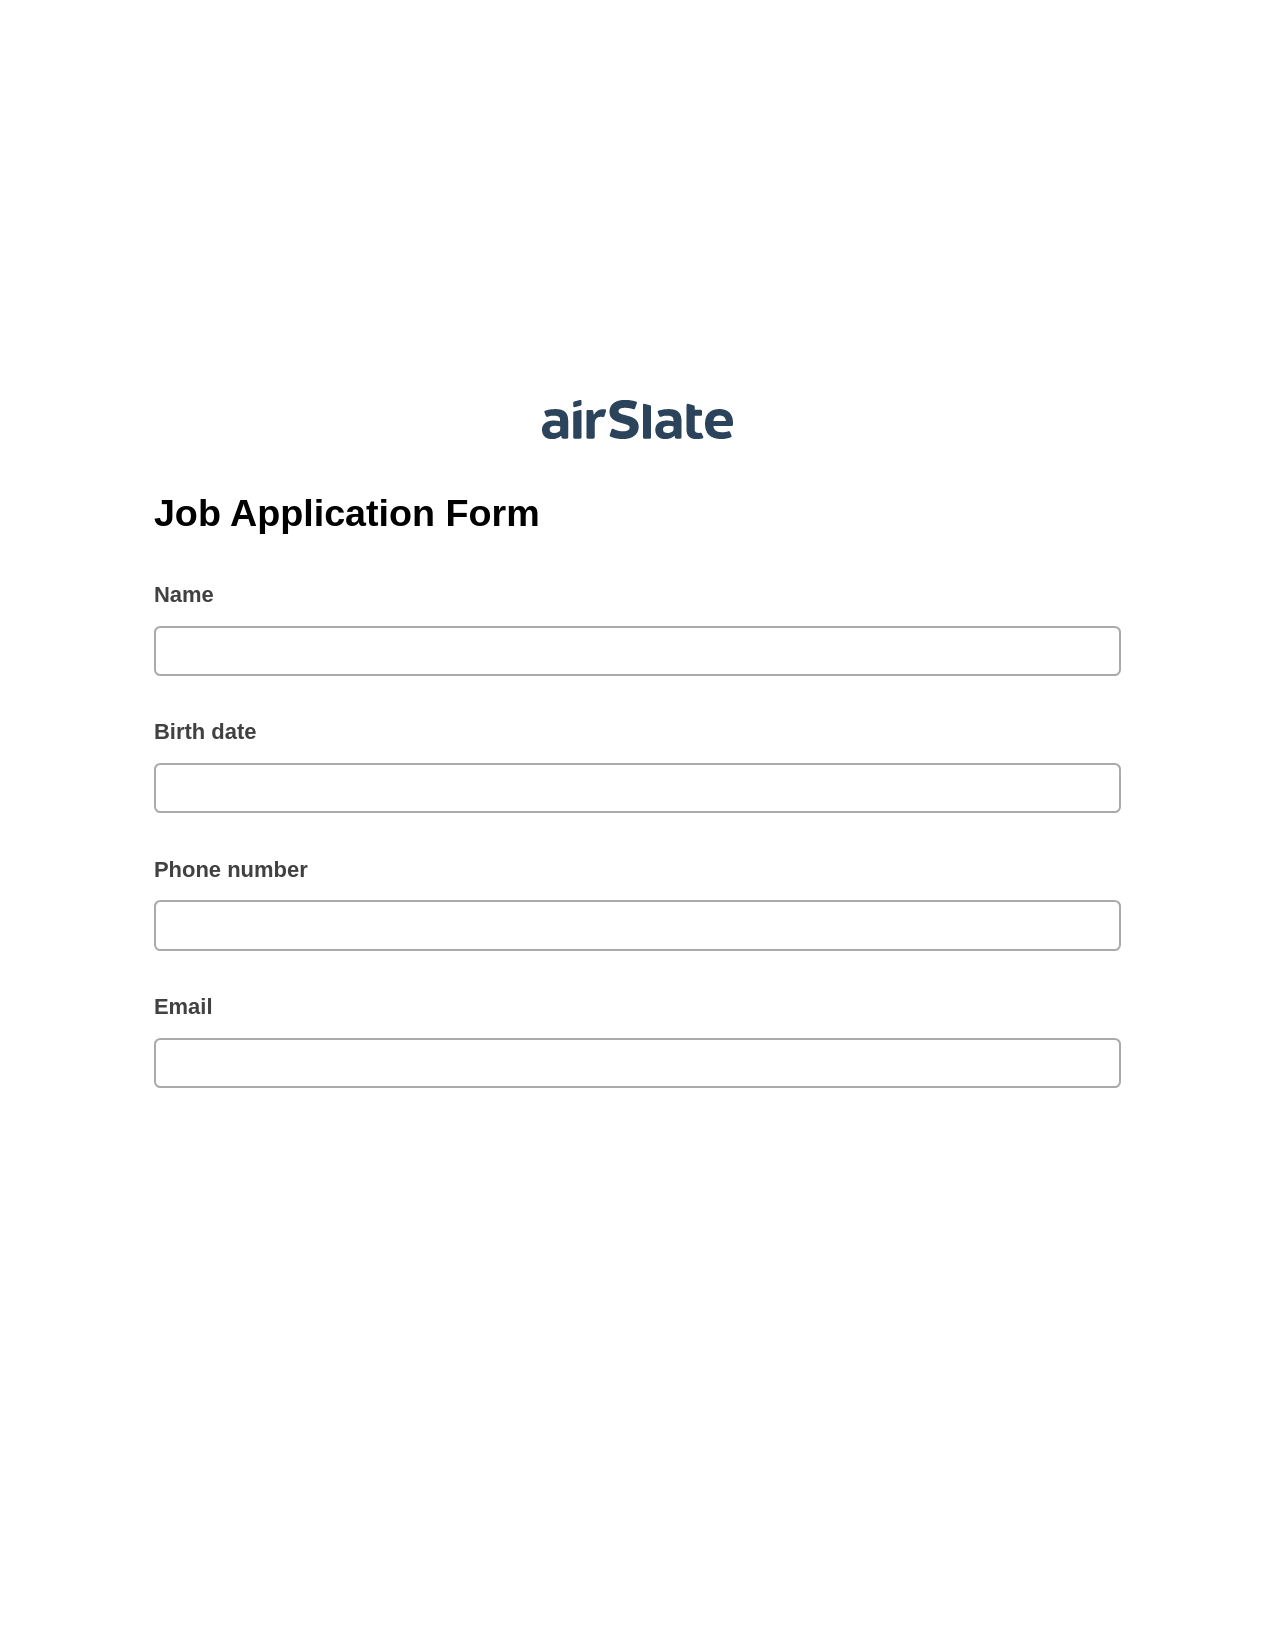 Job Application Form Pre-fill from Google Sheets Bot, Update MS Dynamics 365 Record Bot, Webhook Postfinish Bot